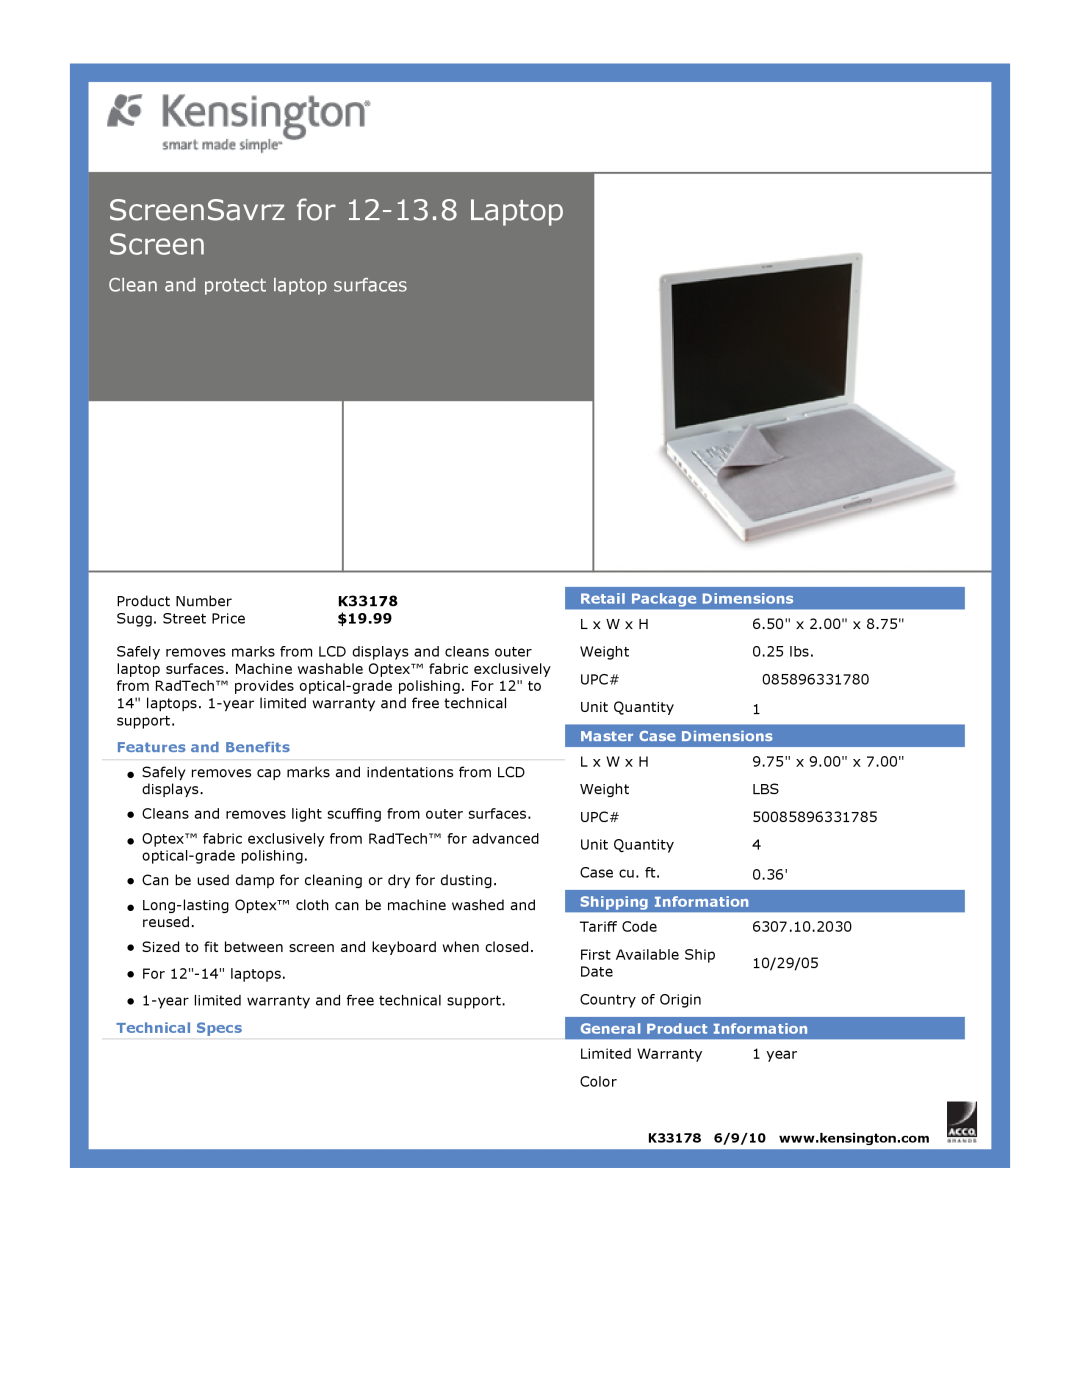 Kensington EU64325 ScreenSavrz for 12-13.8Laptop Screen, Clean and protect laptop surfaces, $19.99, Features and Benefits 